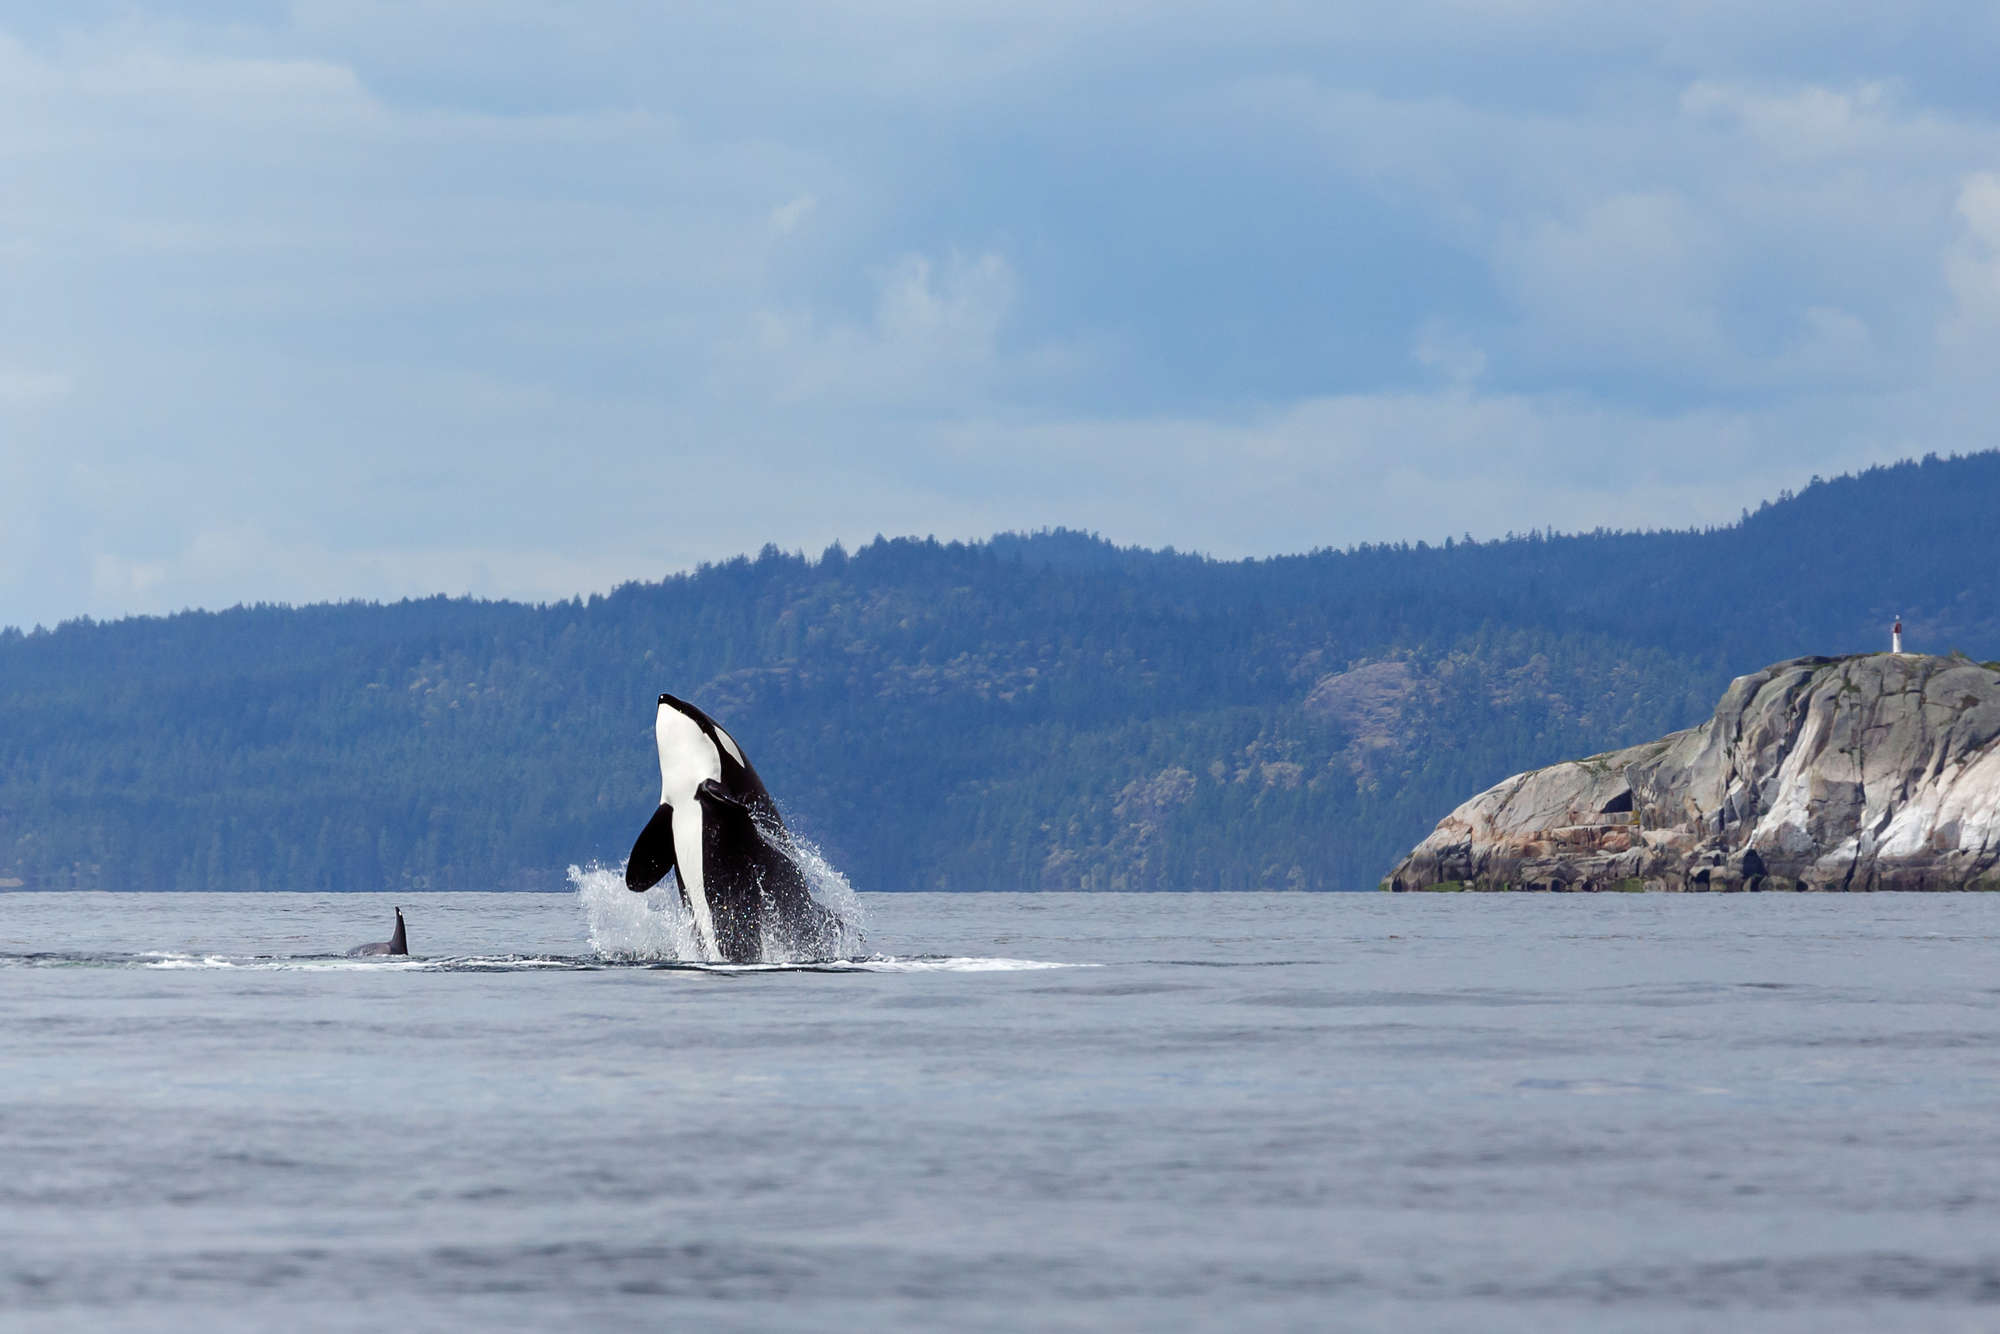 Jumping orca whales Image by MennoSchaefer via Depositphotos